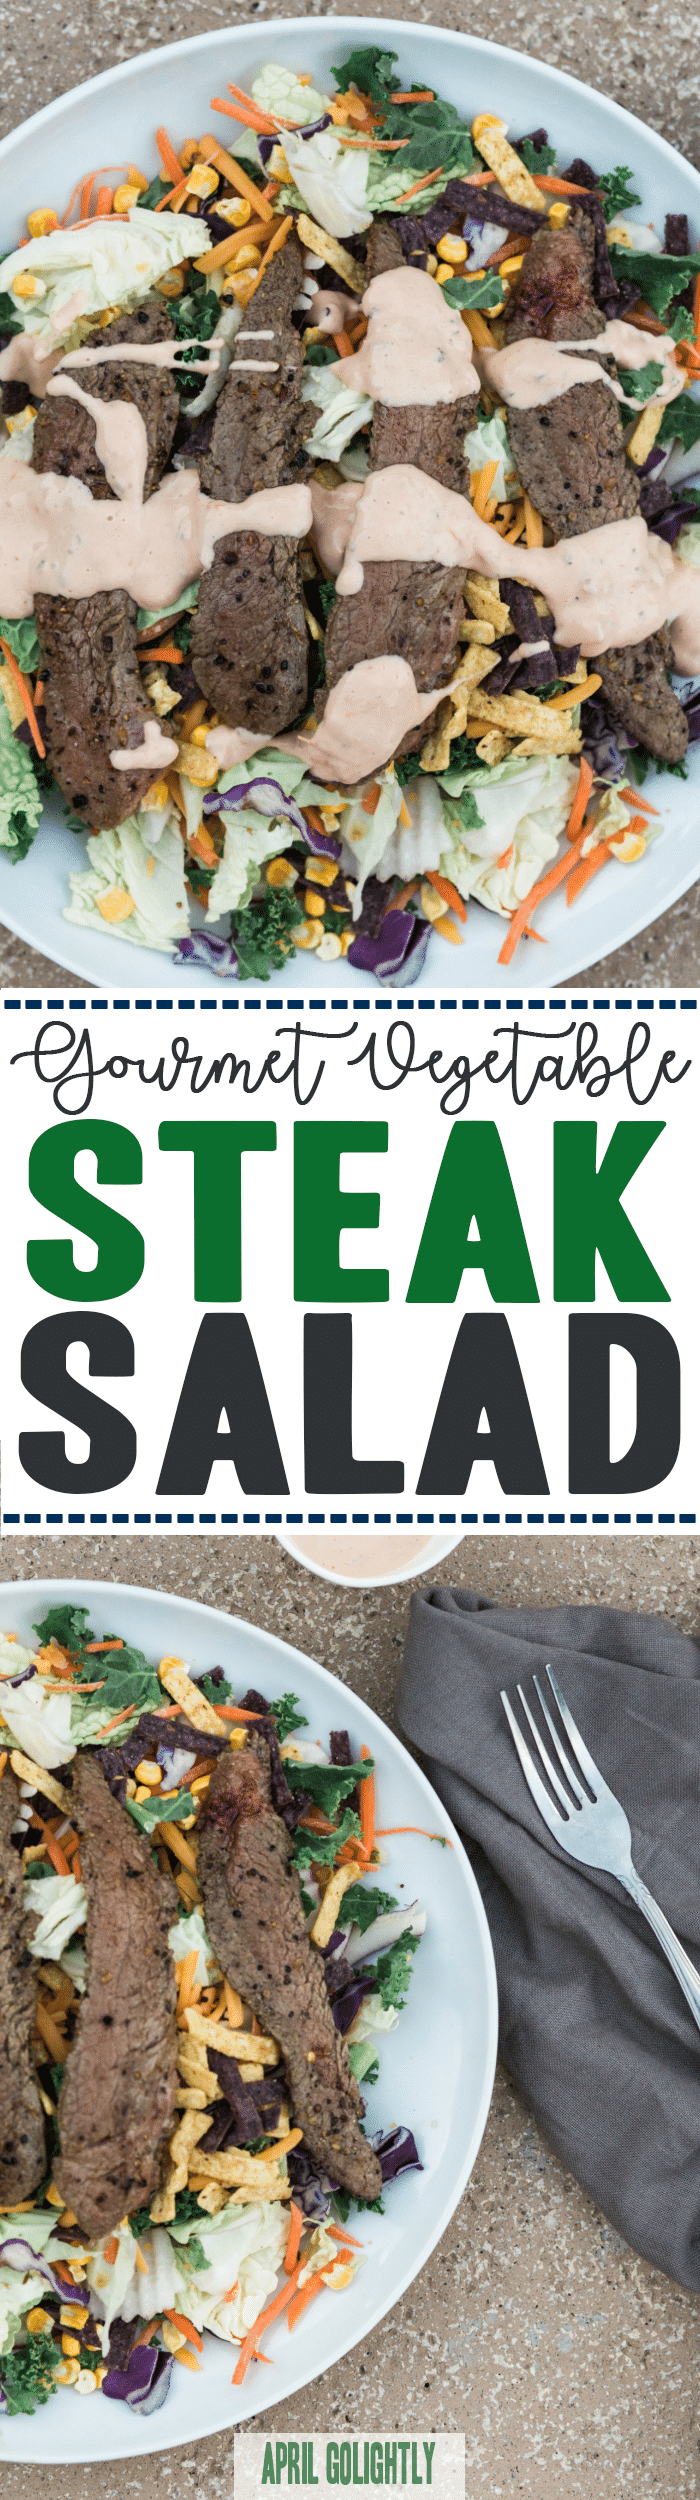 gormet-vegetable-steak-salad-recipe